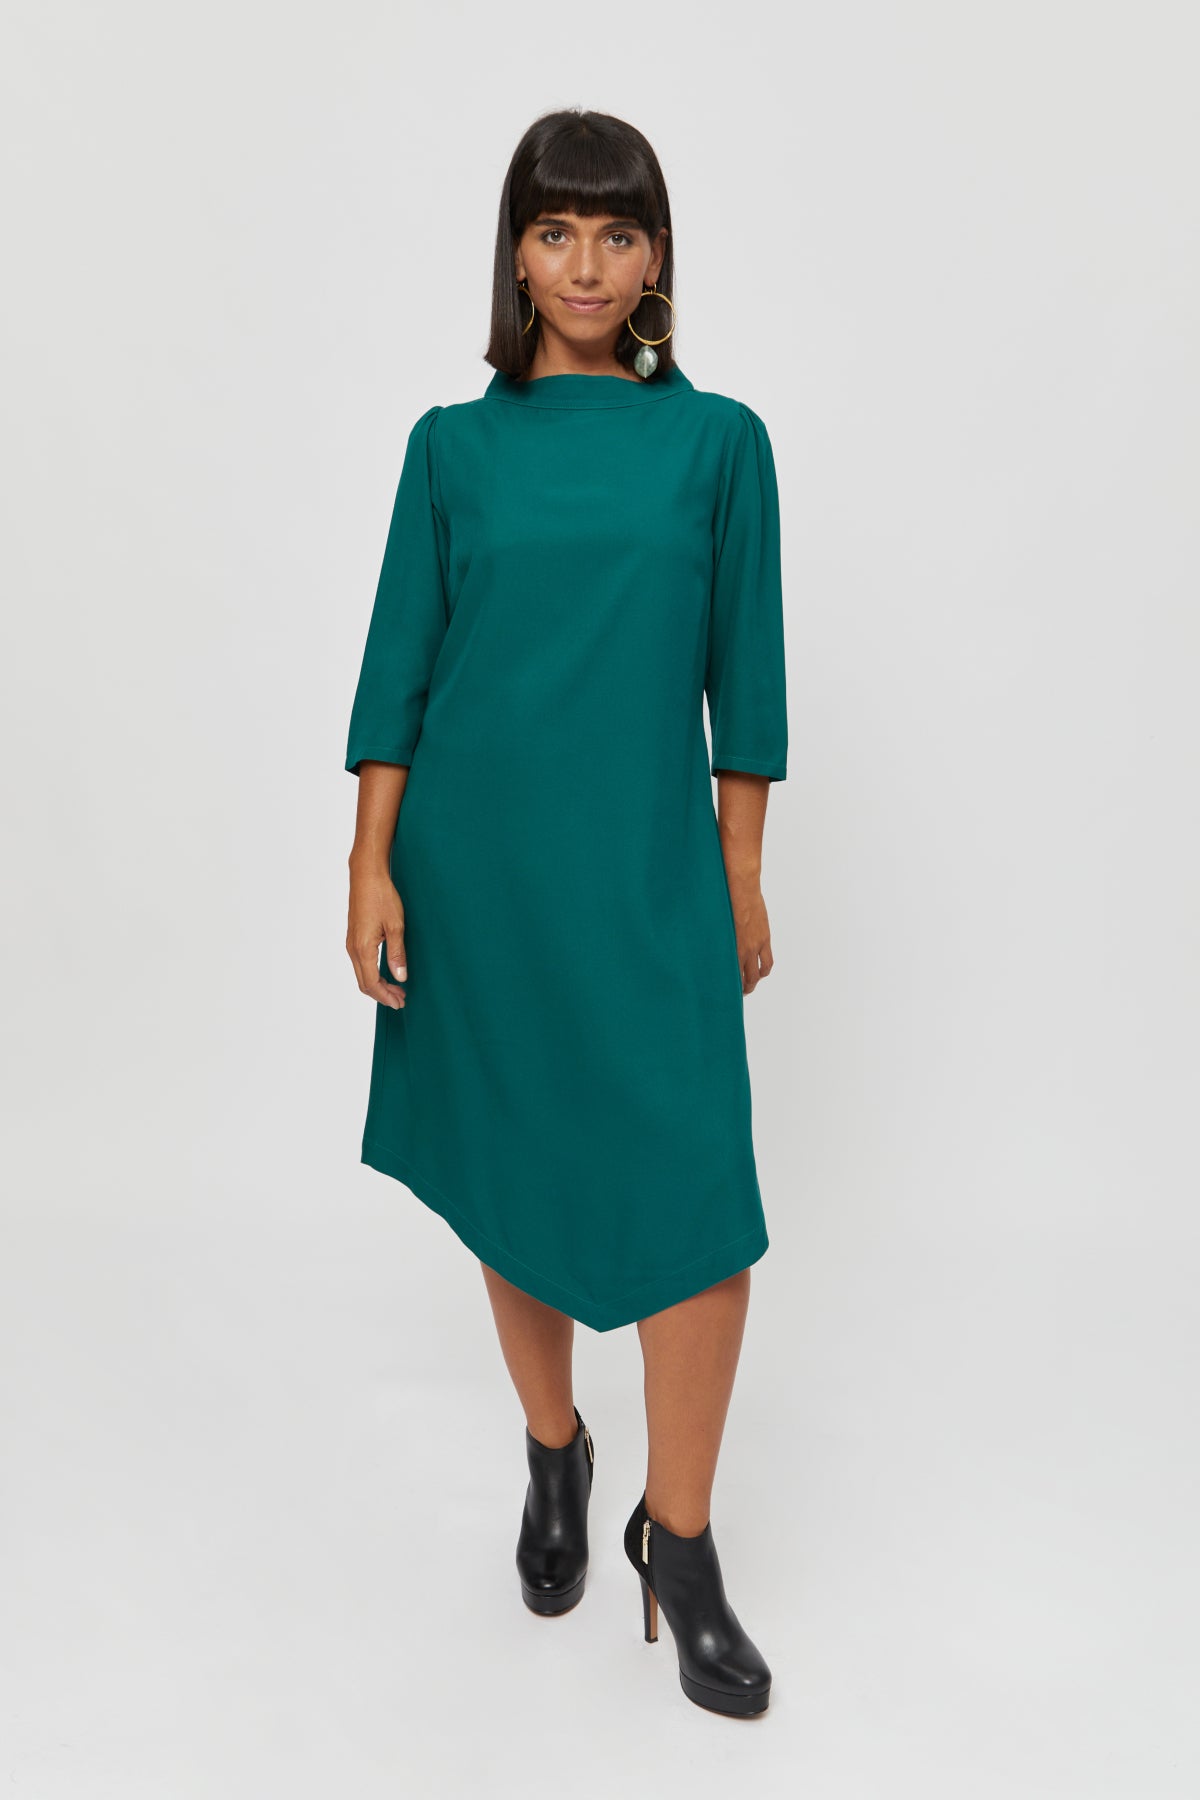 Green Midi Dress SUZI. Formal Evening Dress. Emerald Green Work Dress · A Line Dress with Sleeves - AYANI